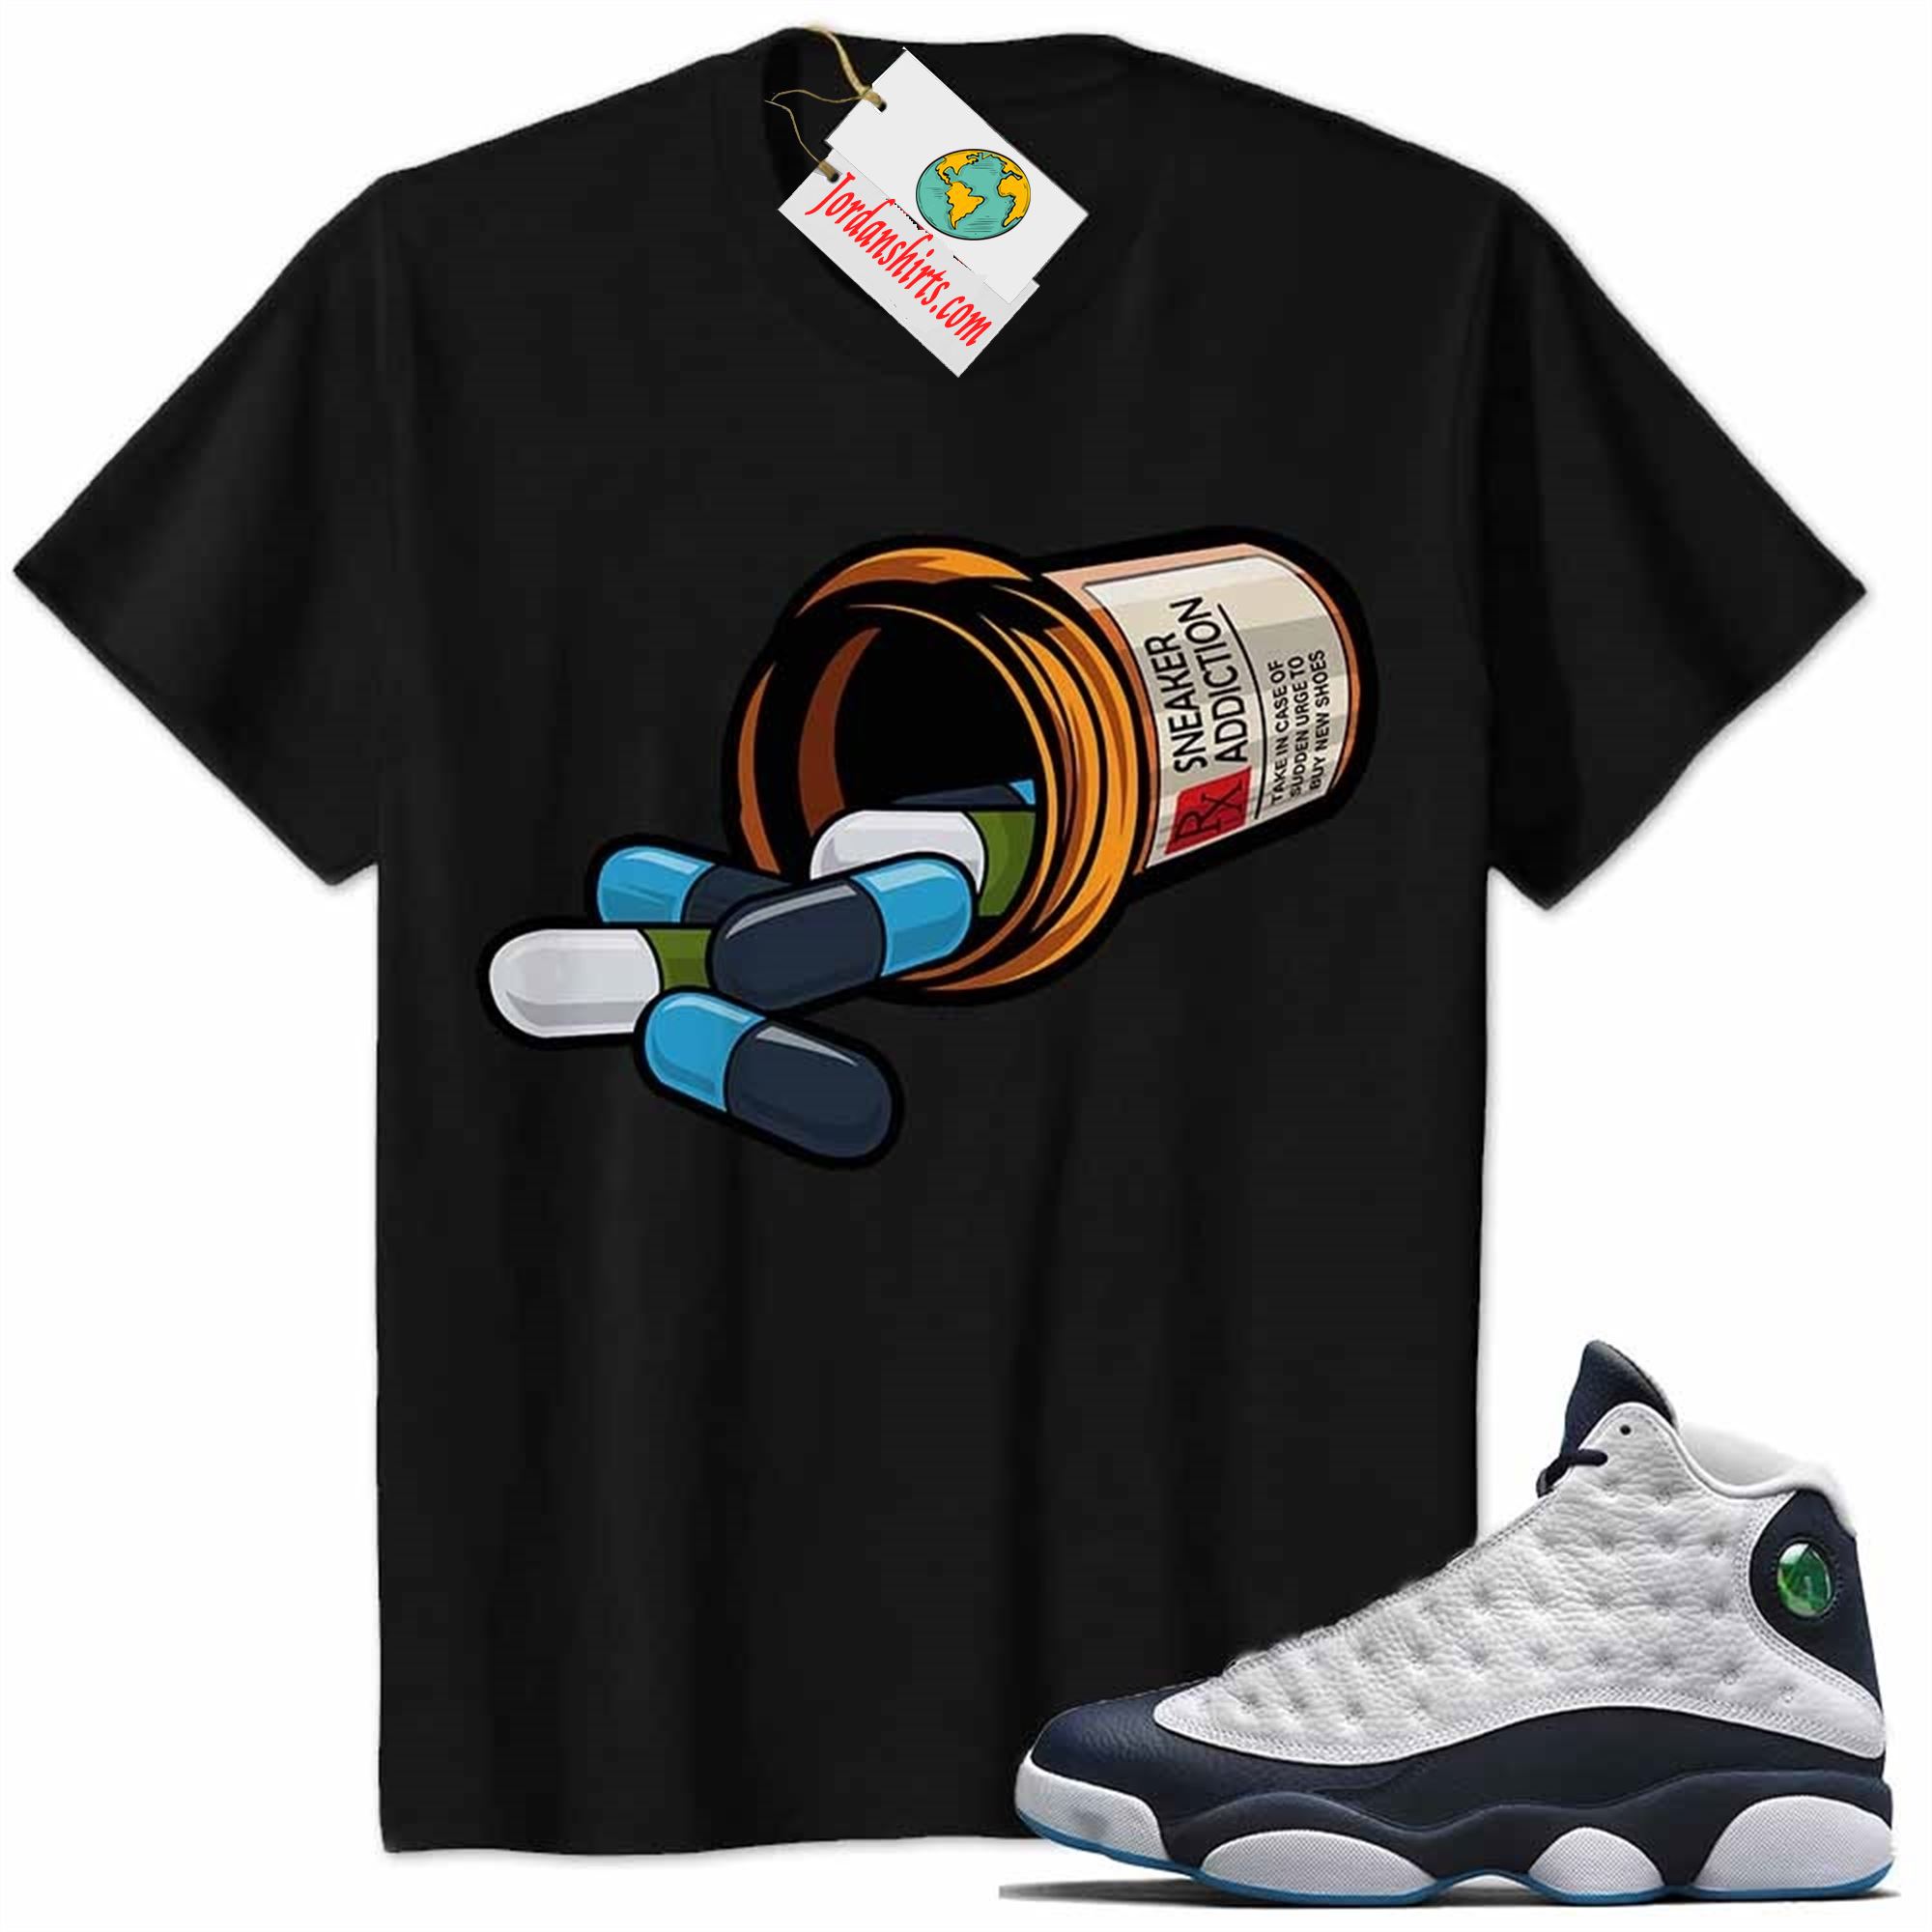 Jordan 13 Shirt, Rx Drugs Pill Bottle Sneaker Addiction Black Air Jordan 13 Obsidian 13s Plus Size Up To 5xl